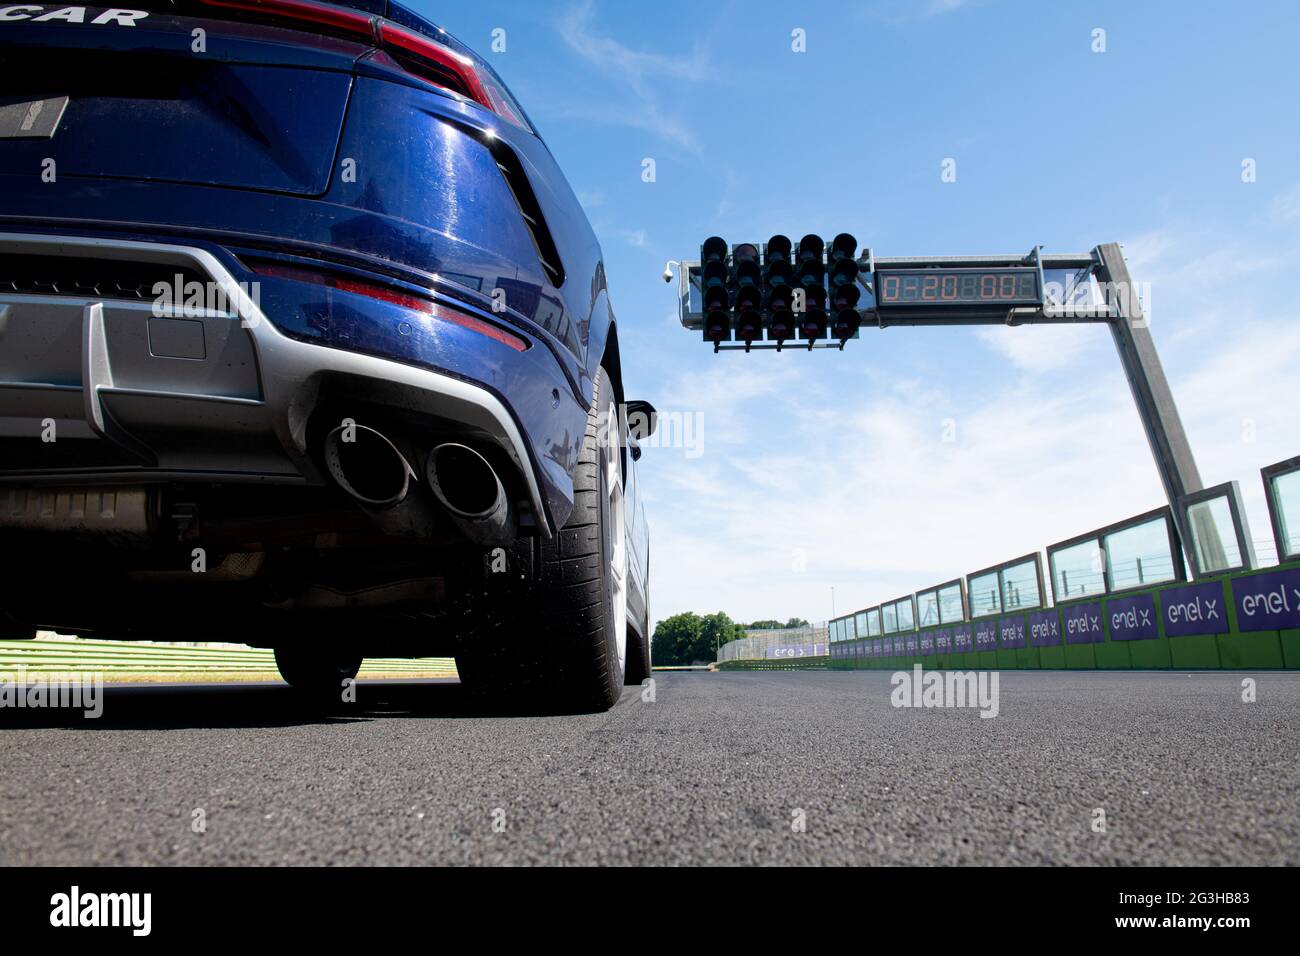 Vallelunga June 13 2021, Fx series racing. Lamborghini safety car on circuit asphalt track starting line, surface level view Stock Photo